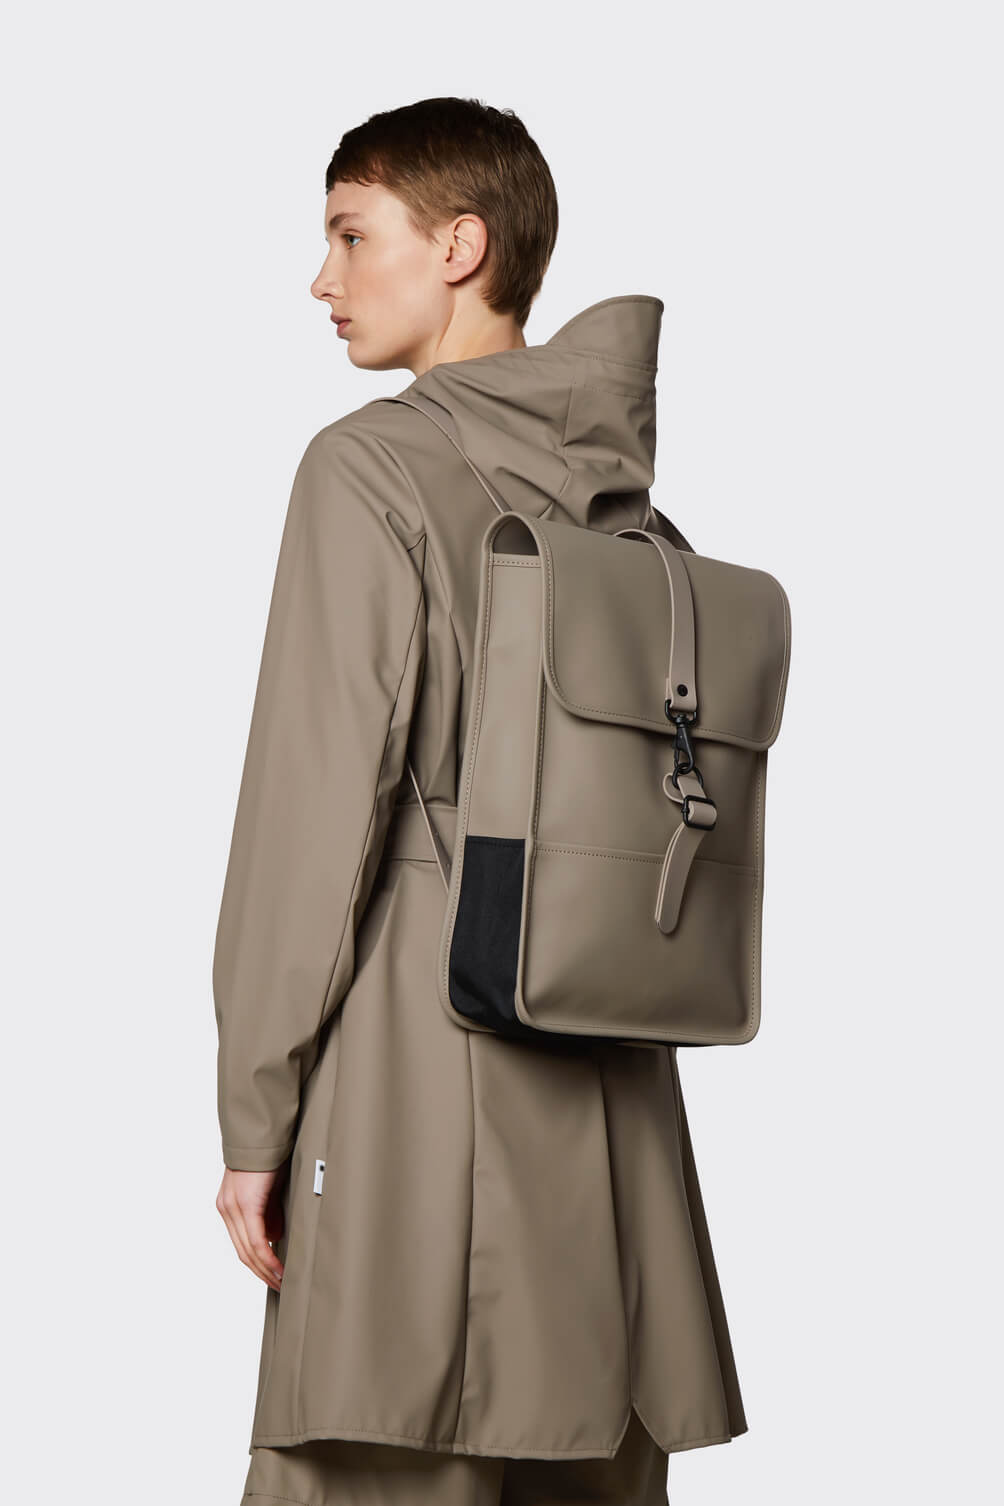 Mini Backpack | Tonal Taupe | by Rains - Lifestory - Rains